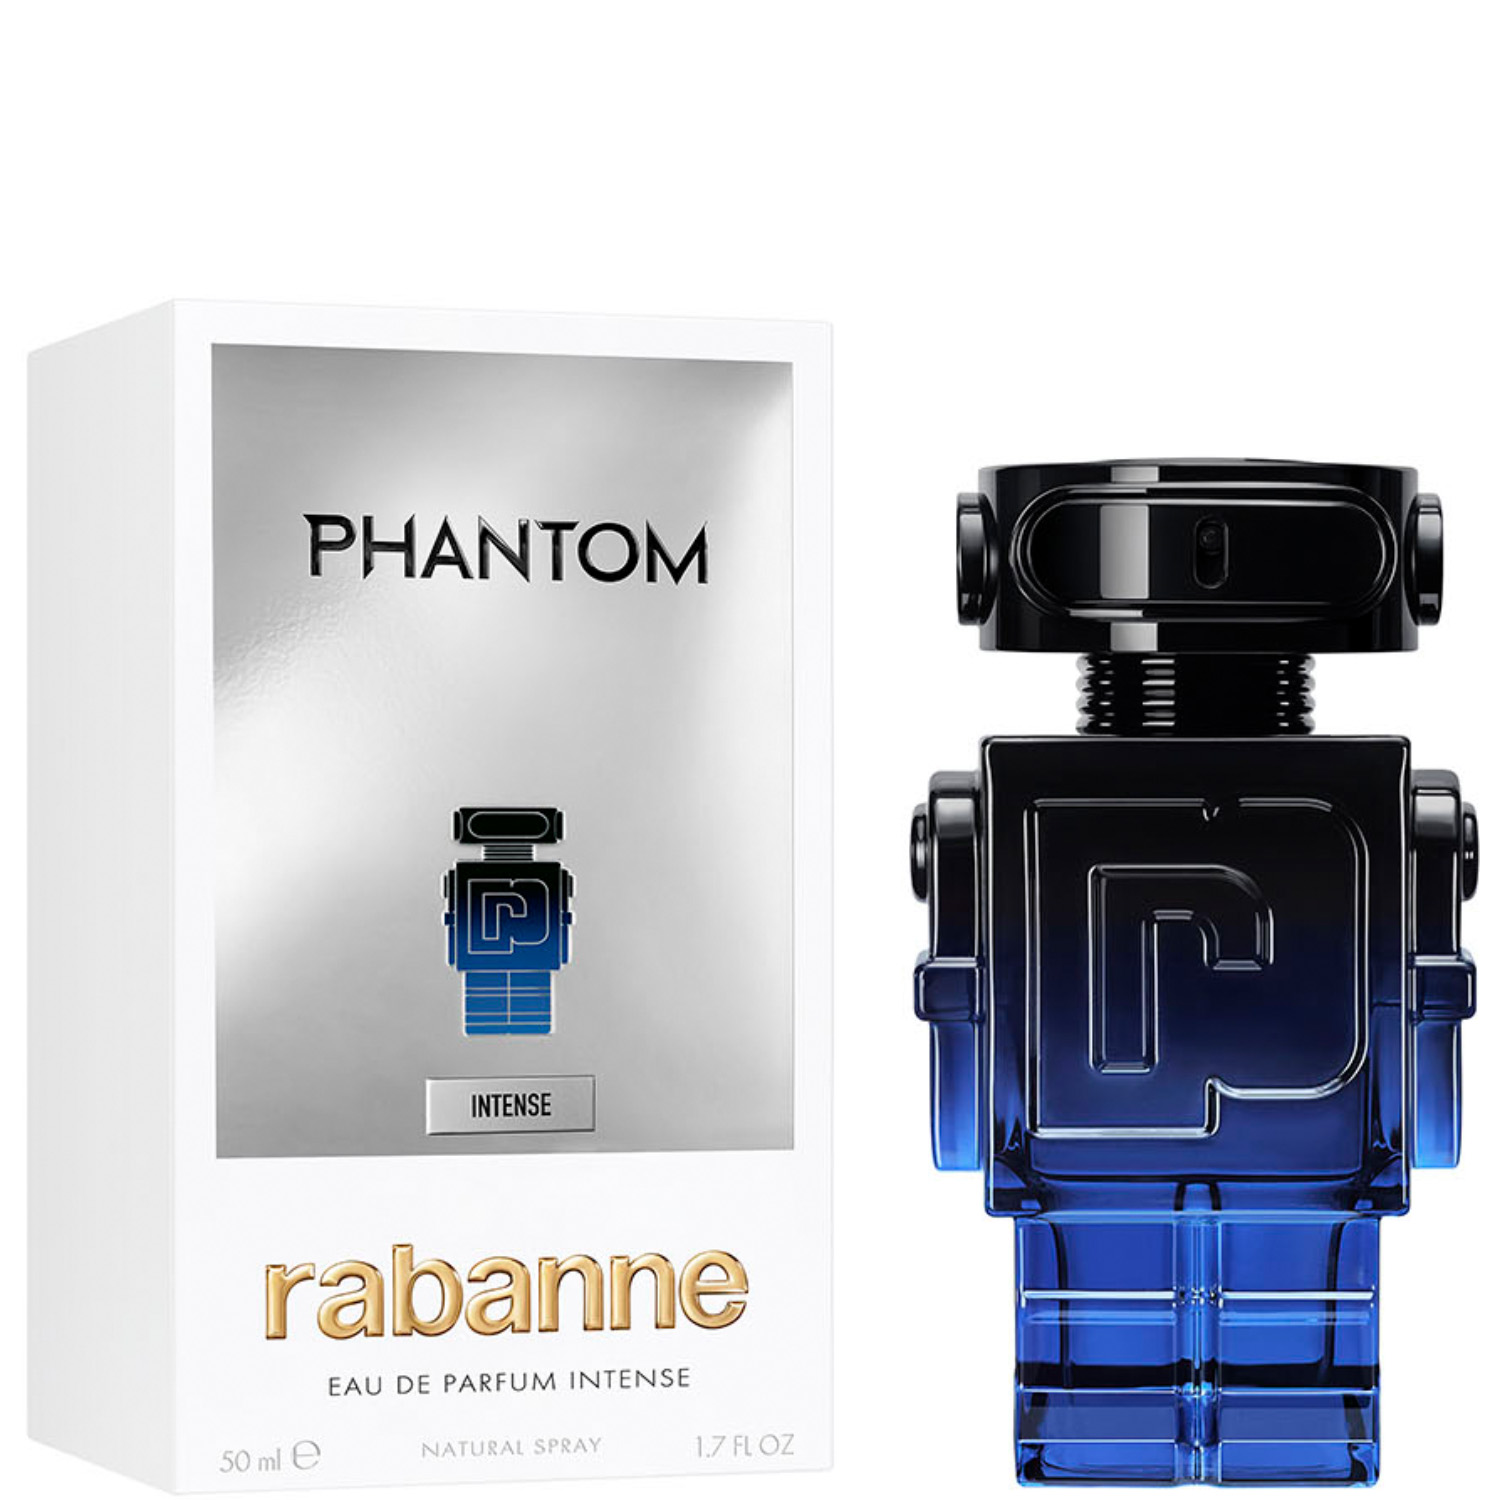 Rabanne Phantom Eau de Parfum Intense 50ml